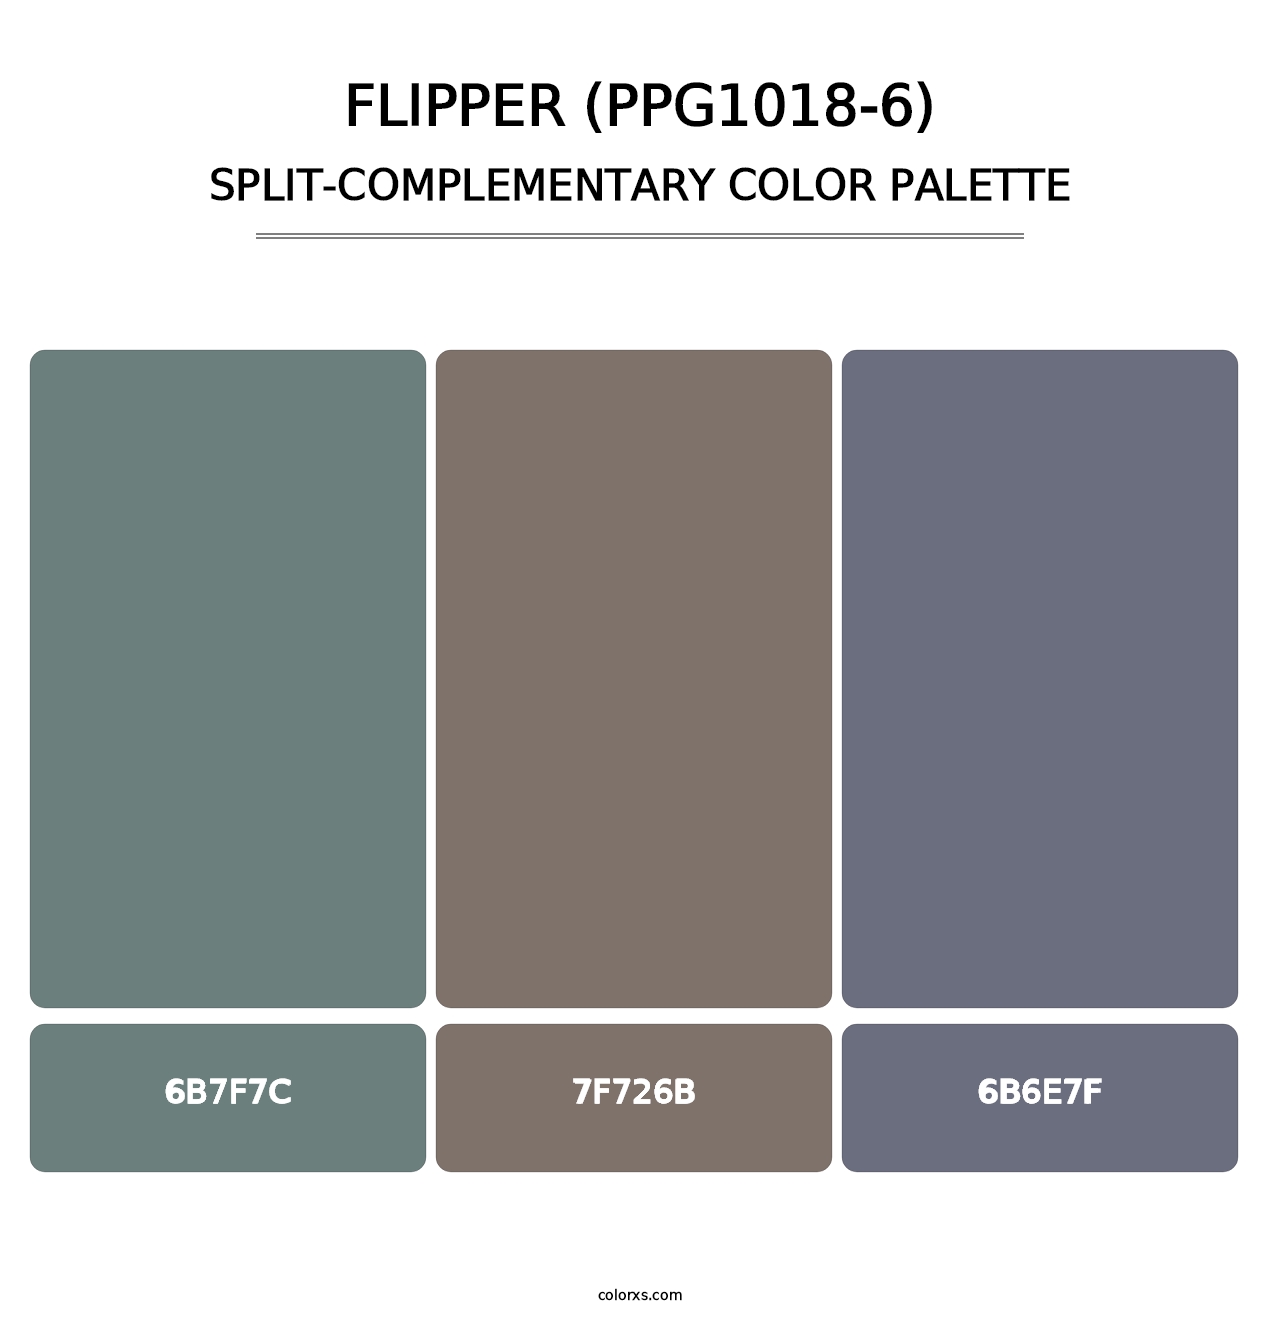 Flipper (PPG1018-6) - Split-Complementary Color Palette